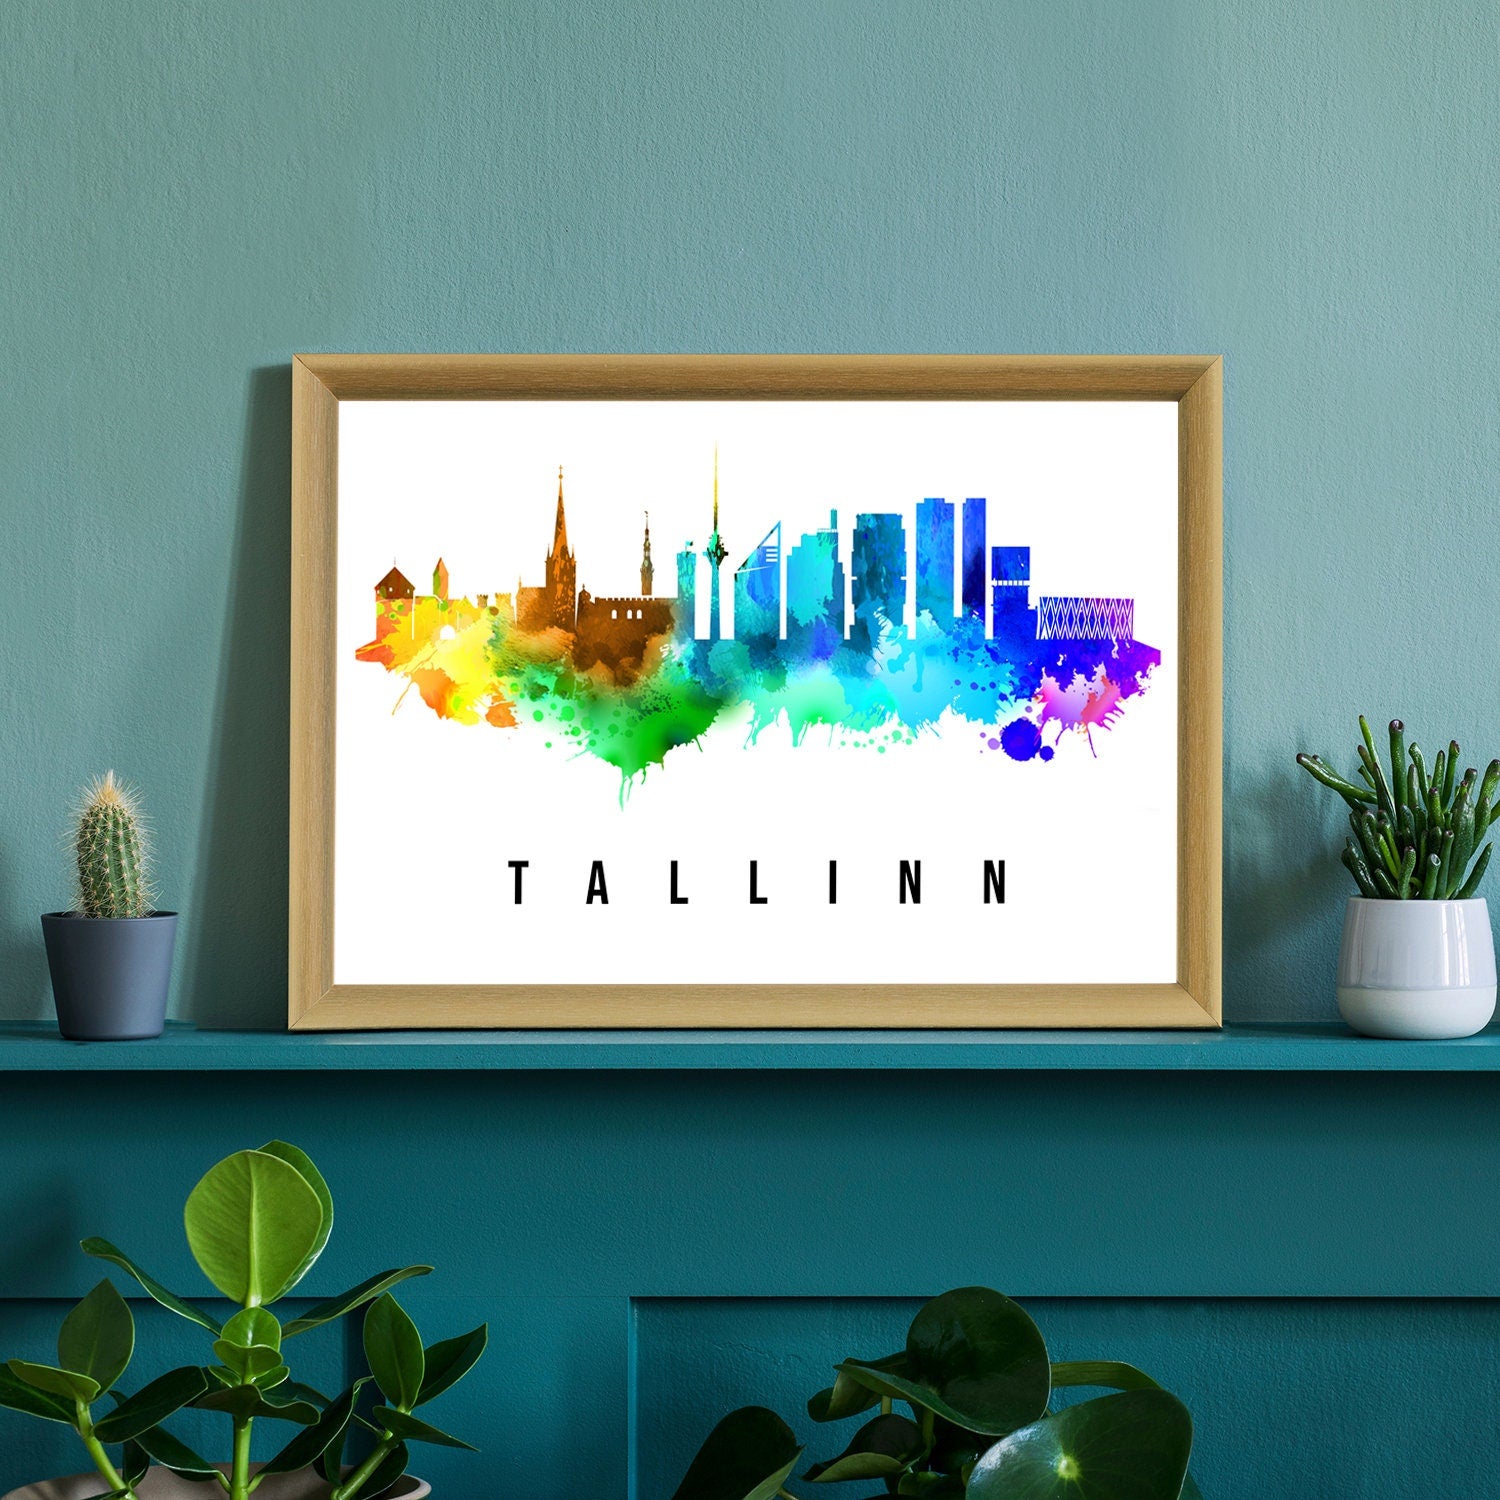 Estonia Tallinn Poster, Skyline poster cityscape poster, Landmark City Illustration poster, Home wall decoration, Office wall art